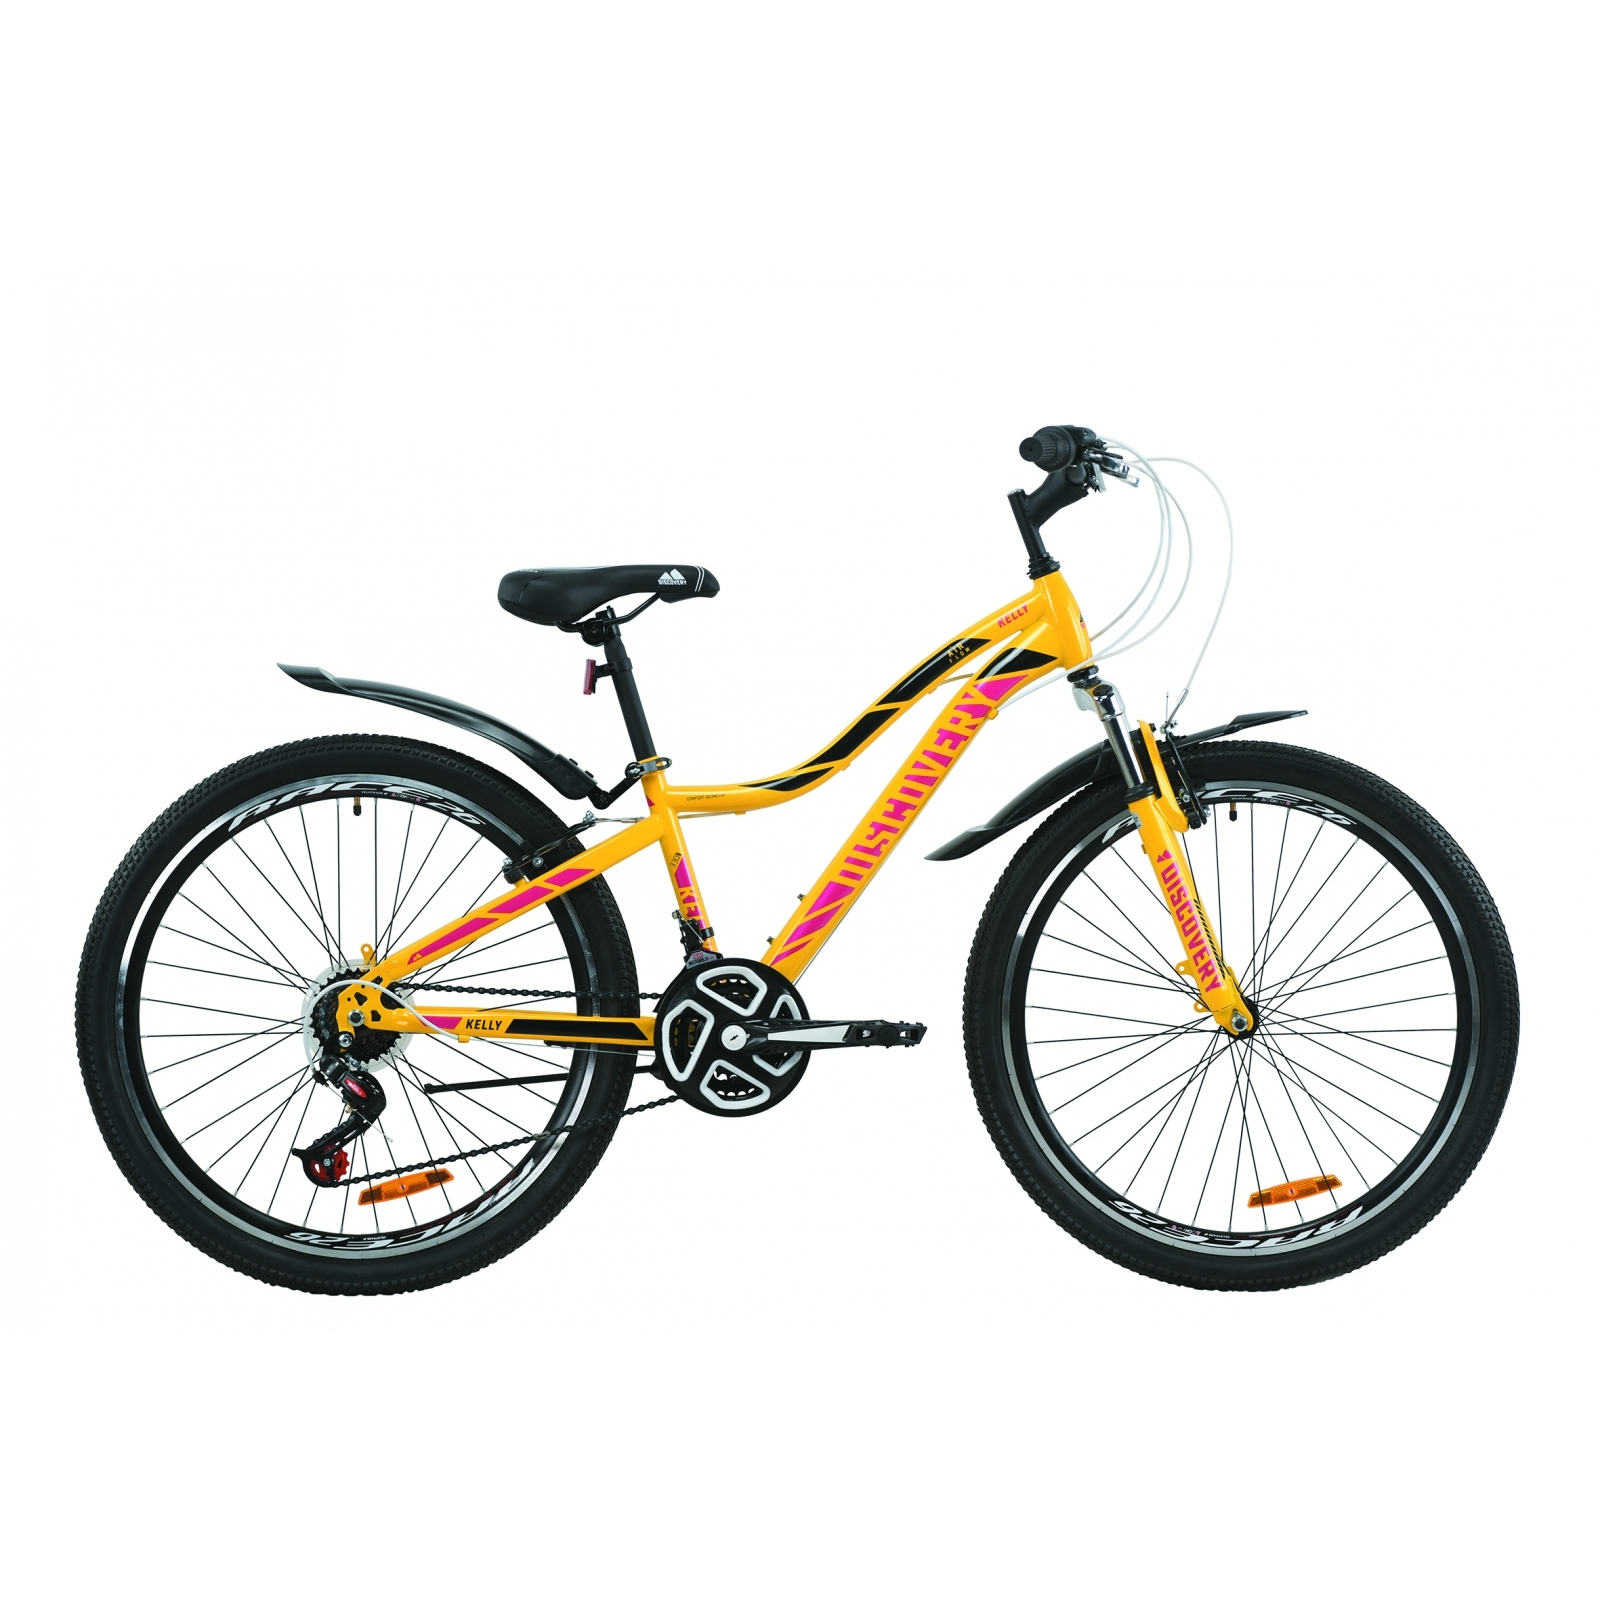 Велосипед Discovery 26" KELLY AM Vbr рама-13,5" St 2020 желто-сиреневый с черным (OPS-DIS-26-246)